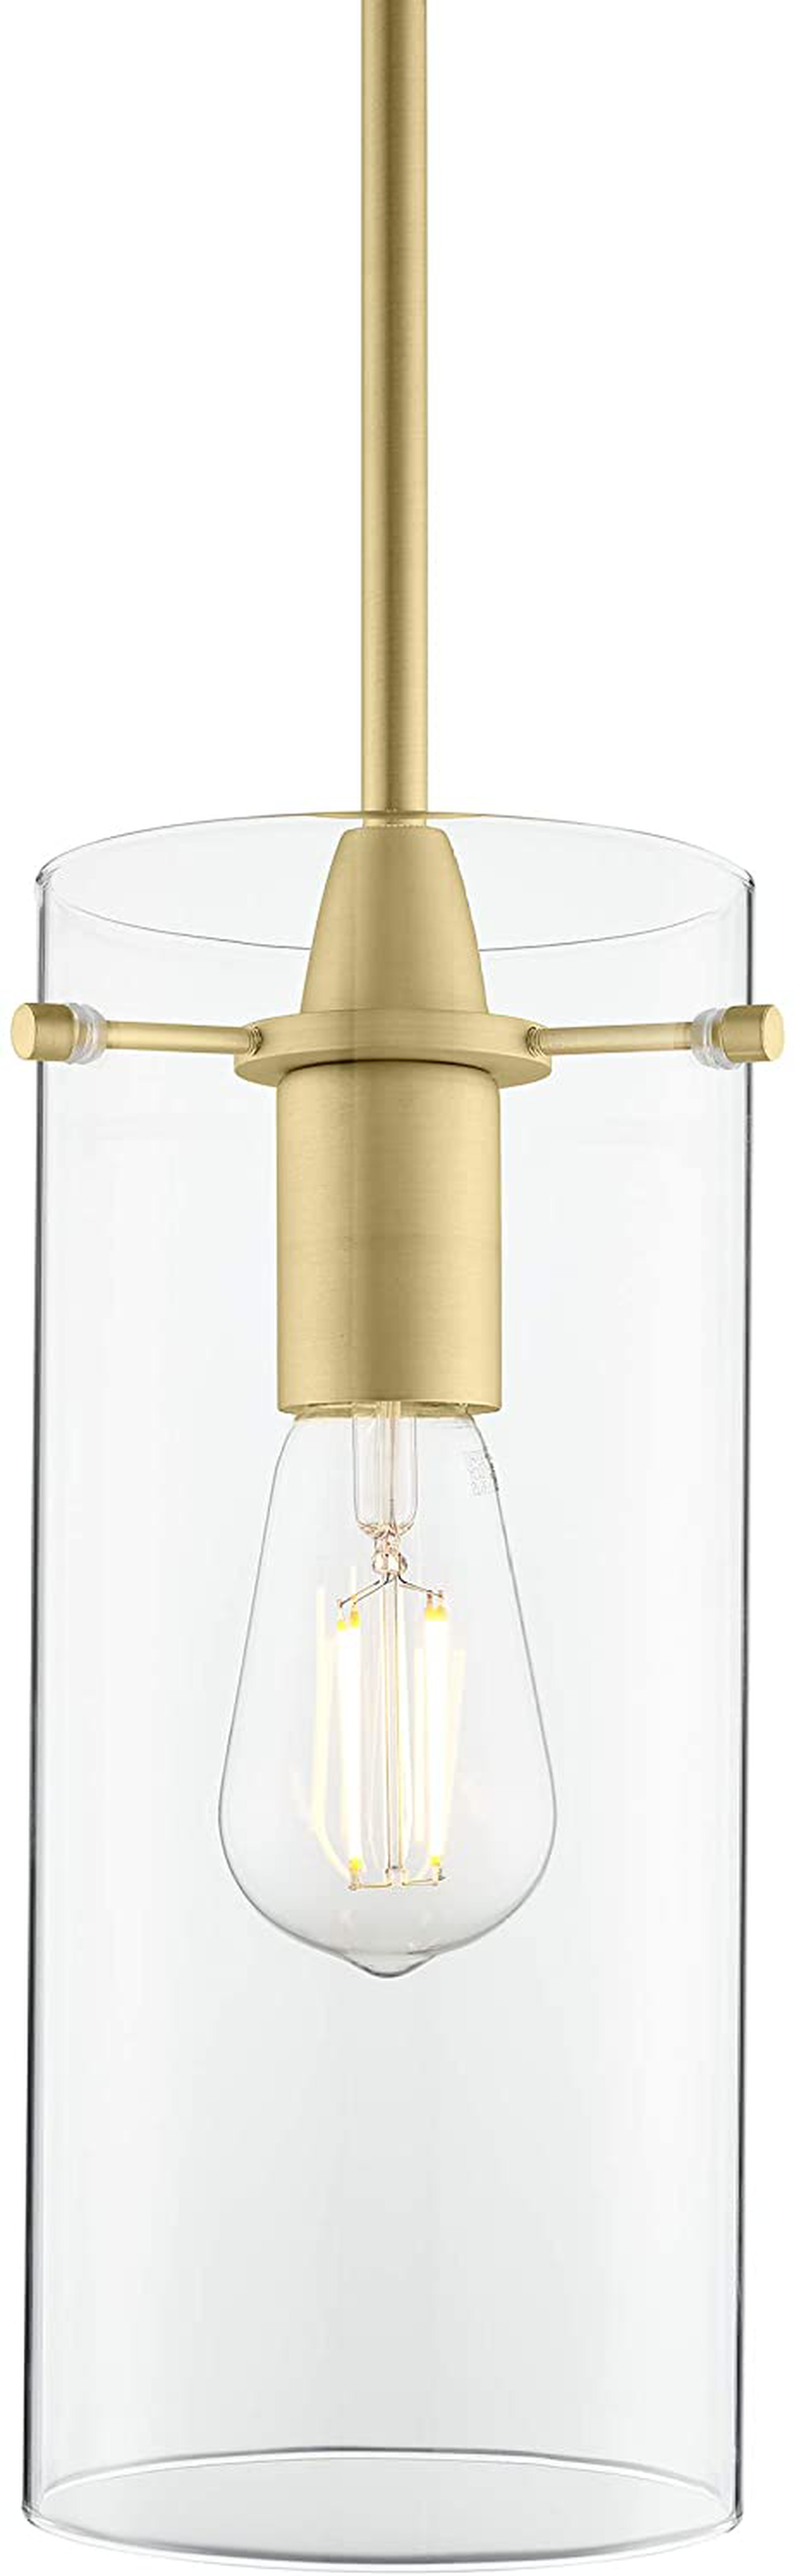 Gold Pendant Light - Modern Effimero Mini Pendant Lighting for Kitchen Island Decor - Clear Glass Fixture with Large Lamp Shade